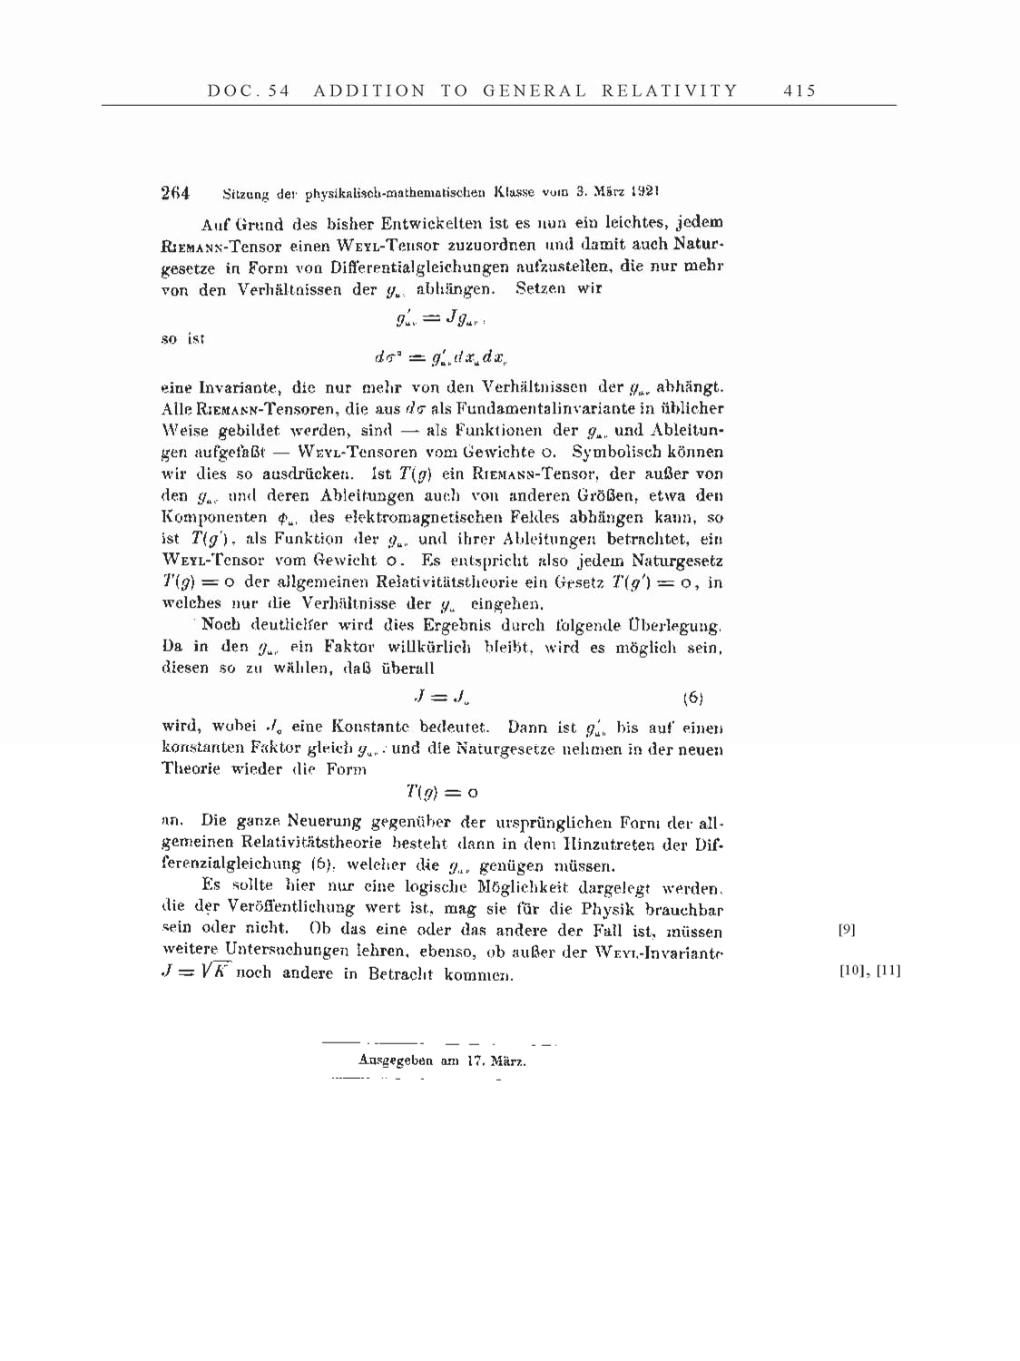 Volume 7: The Berlin Years: Writings, 1918-1921 page 415